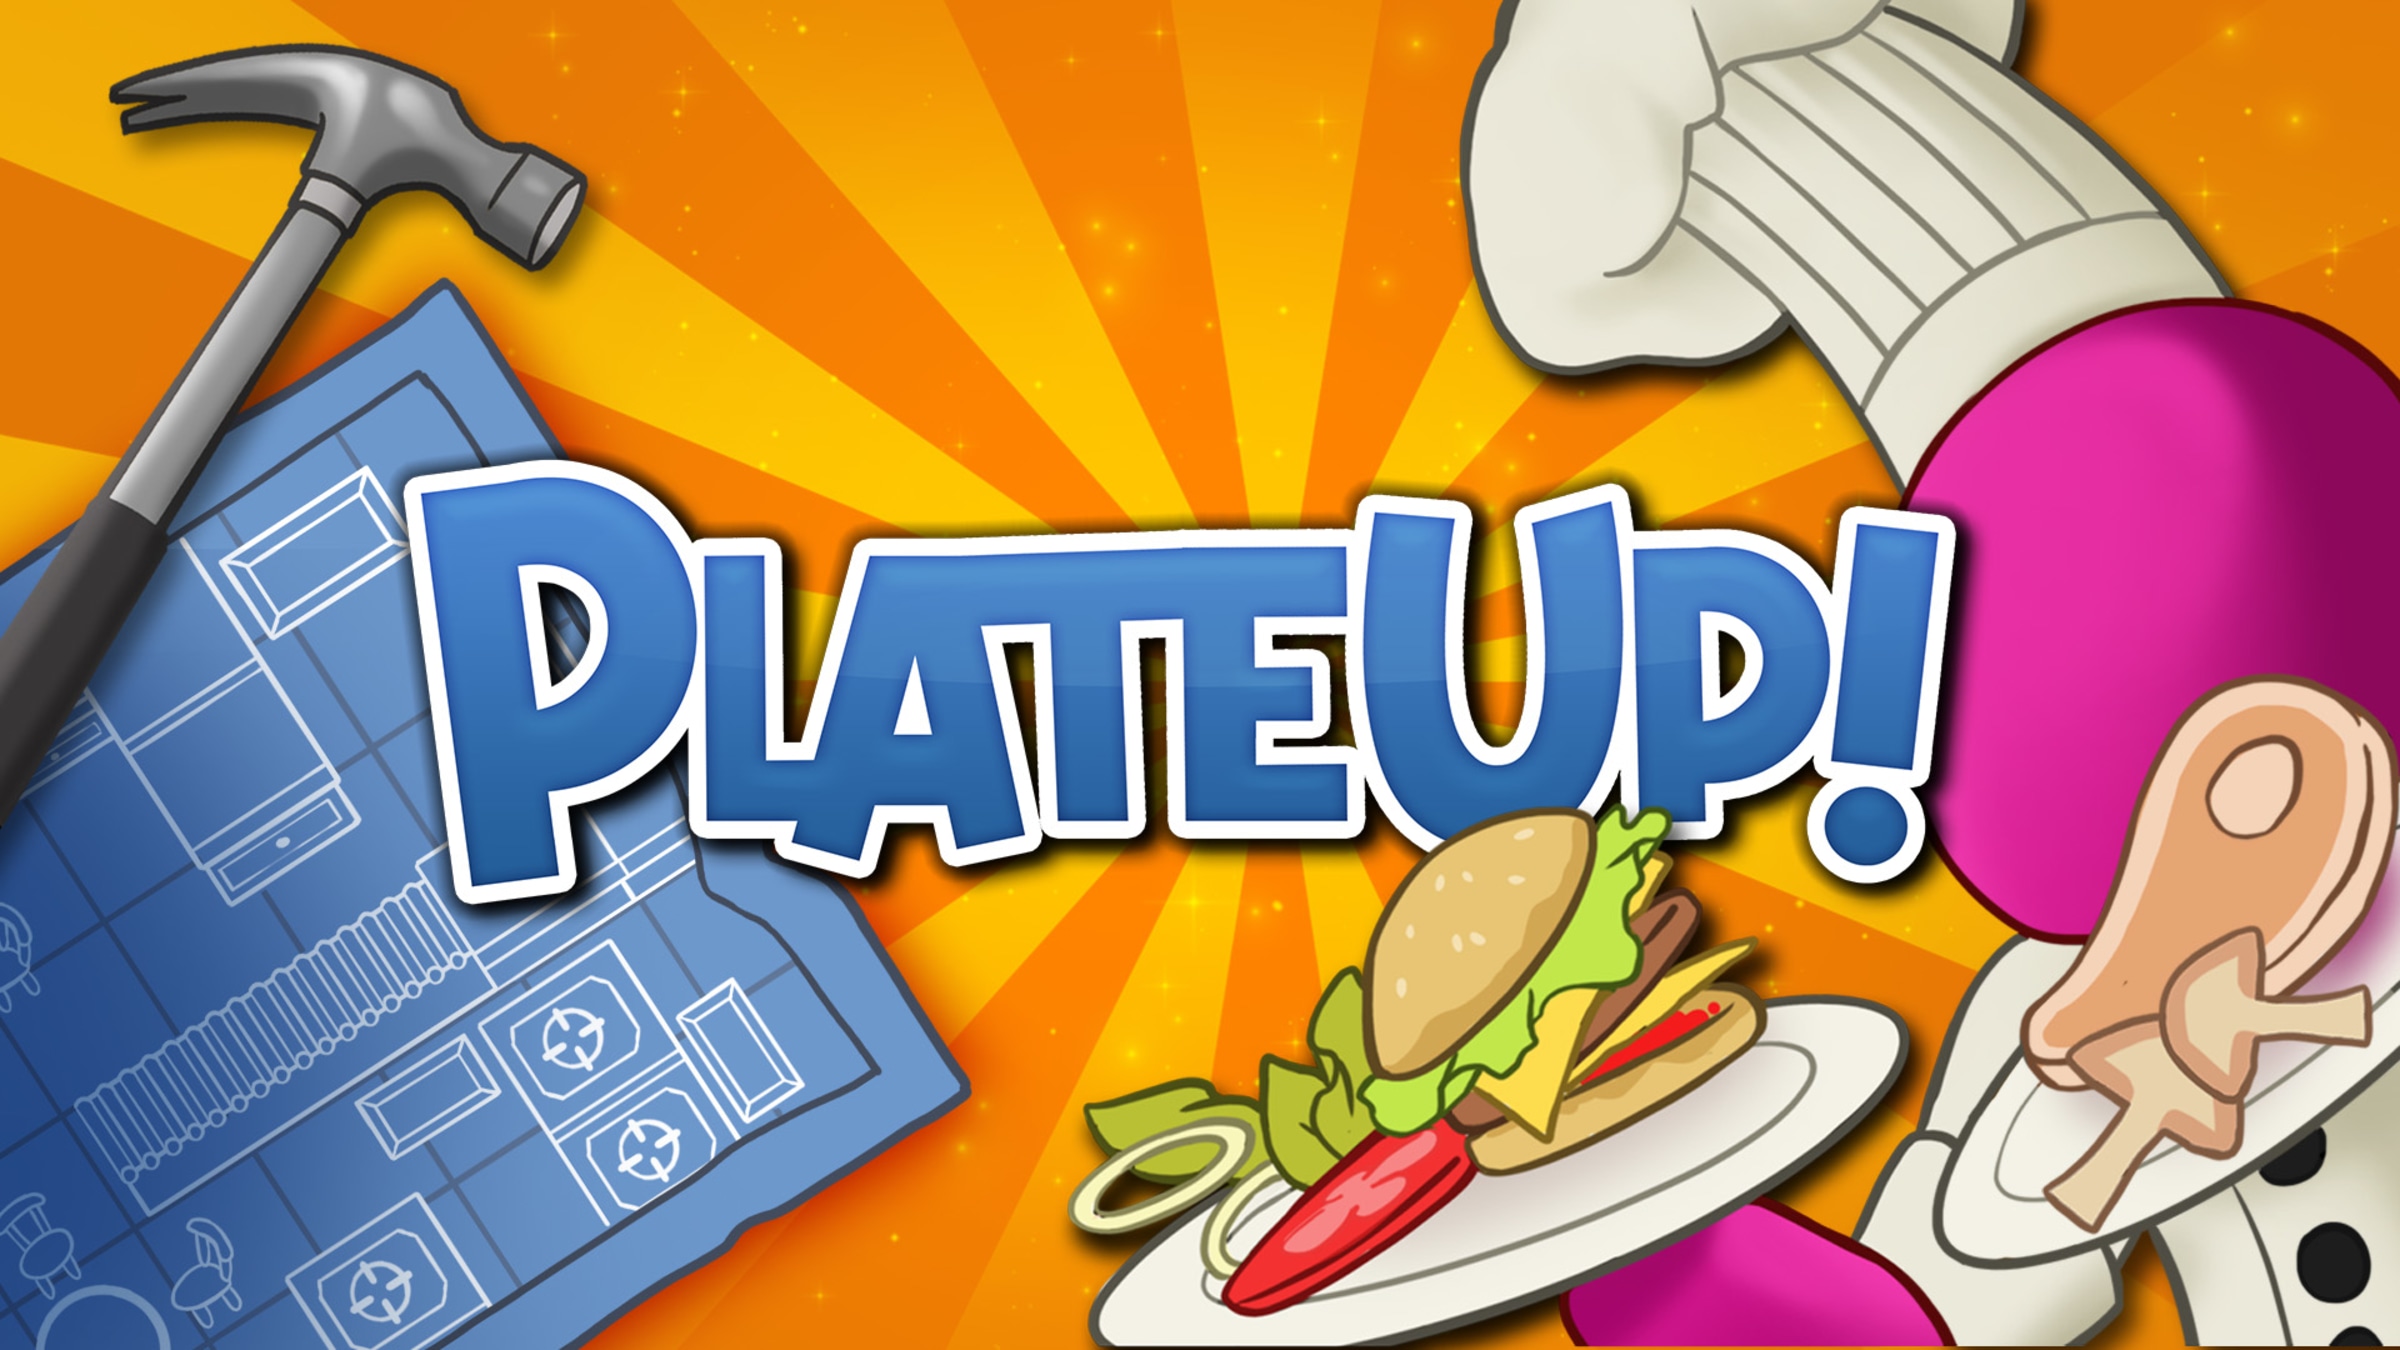 PlateUp PS4 Version Full Game Setup Free Download